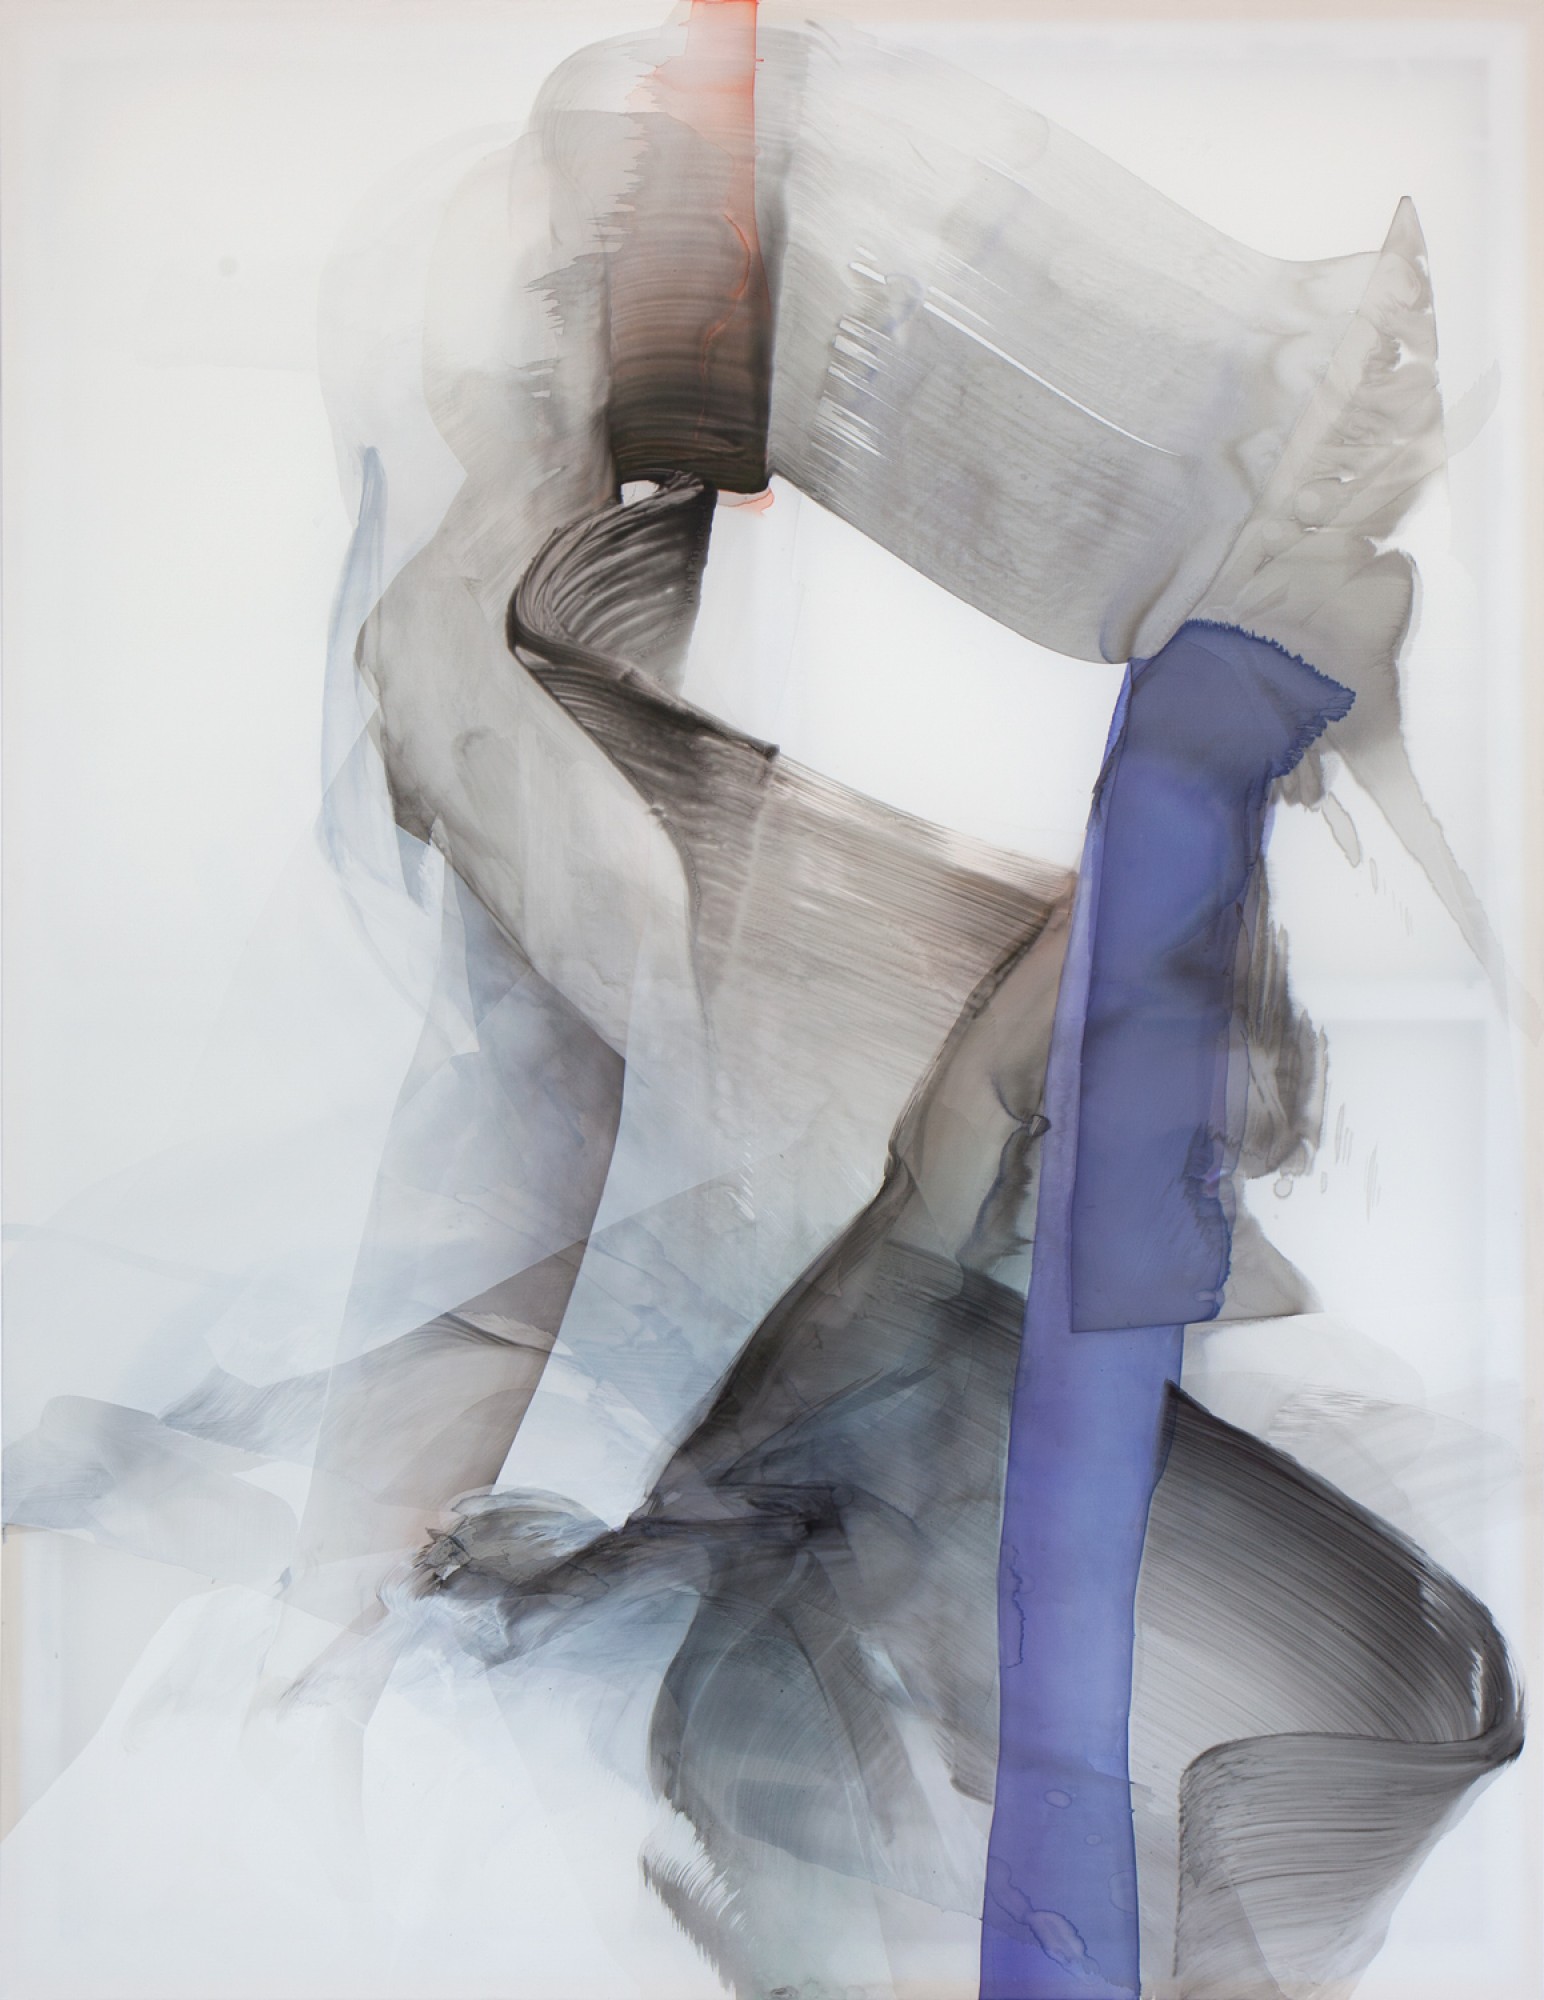 Natascha Schmitten - Ran, 2020, ink, acryl on nylon, 220 x 170 cm